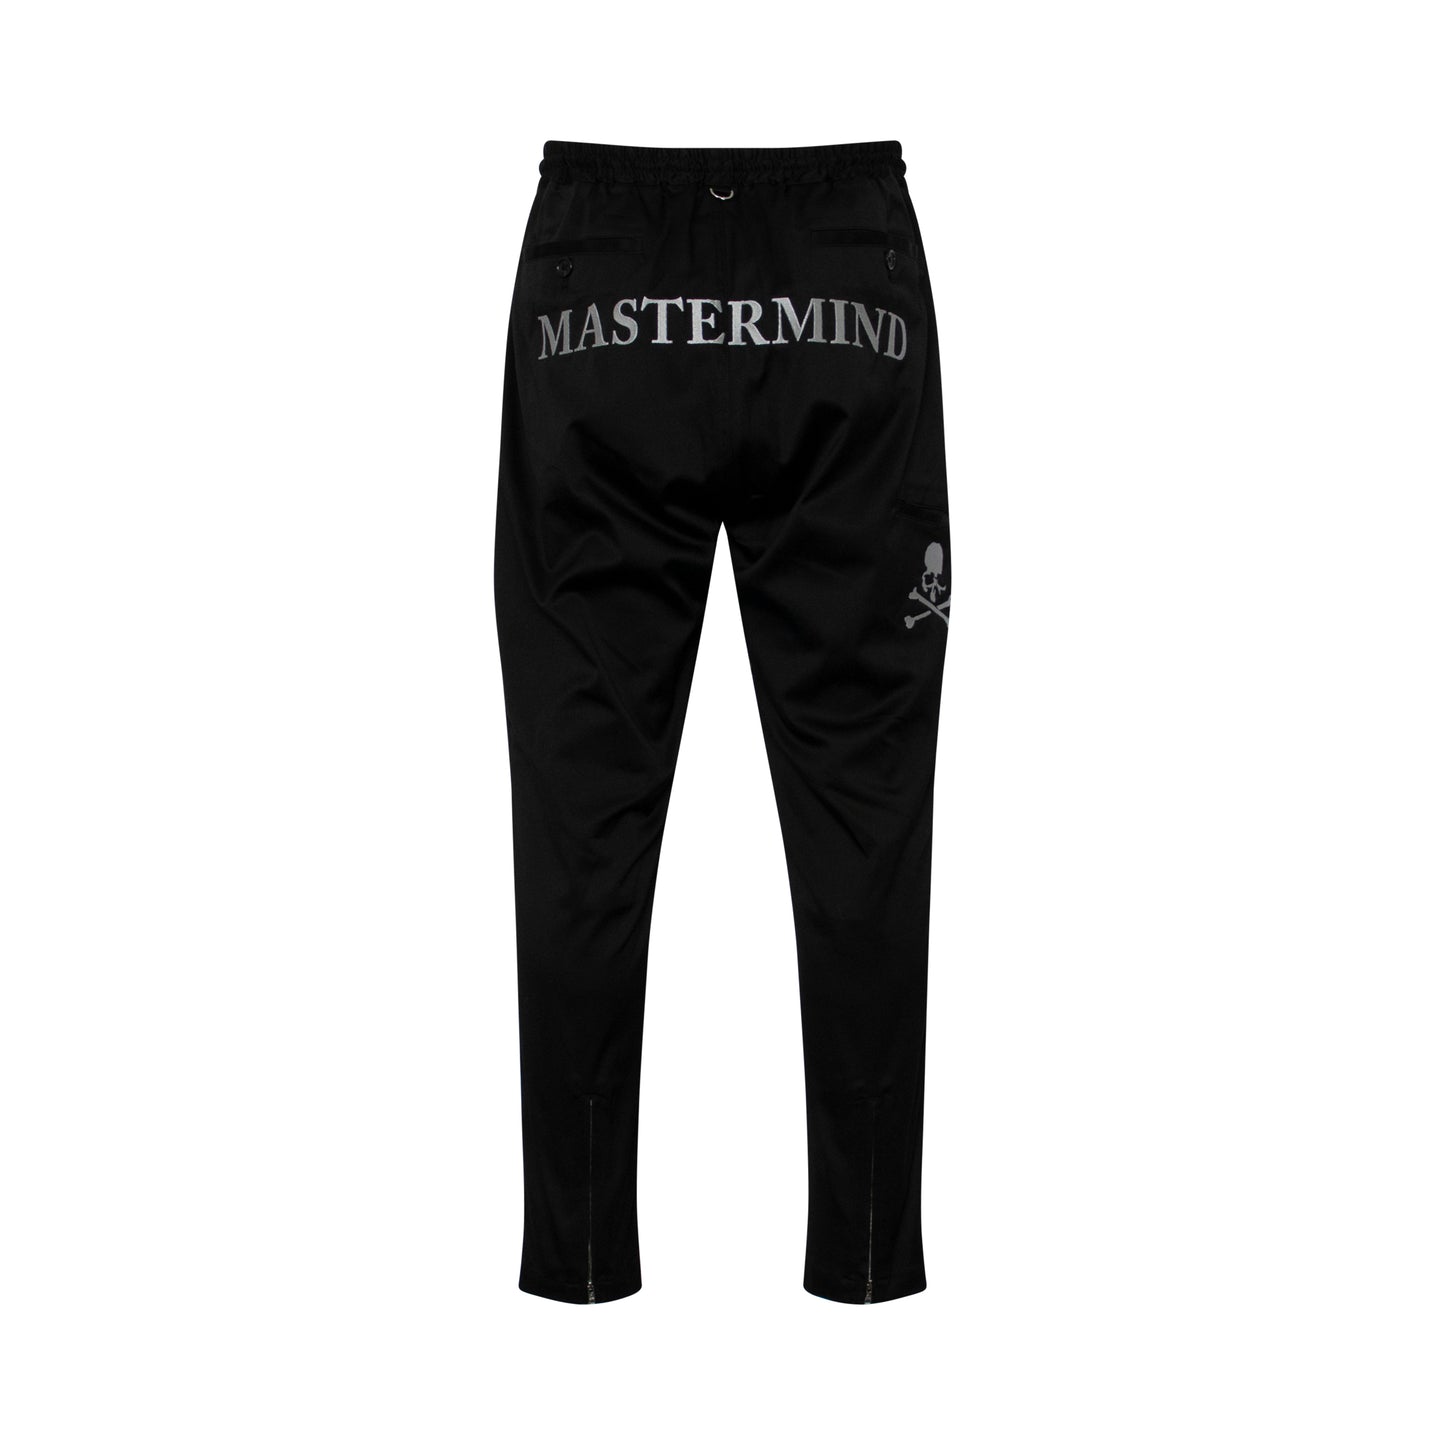 Mastermind World Pants in Black